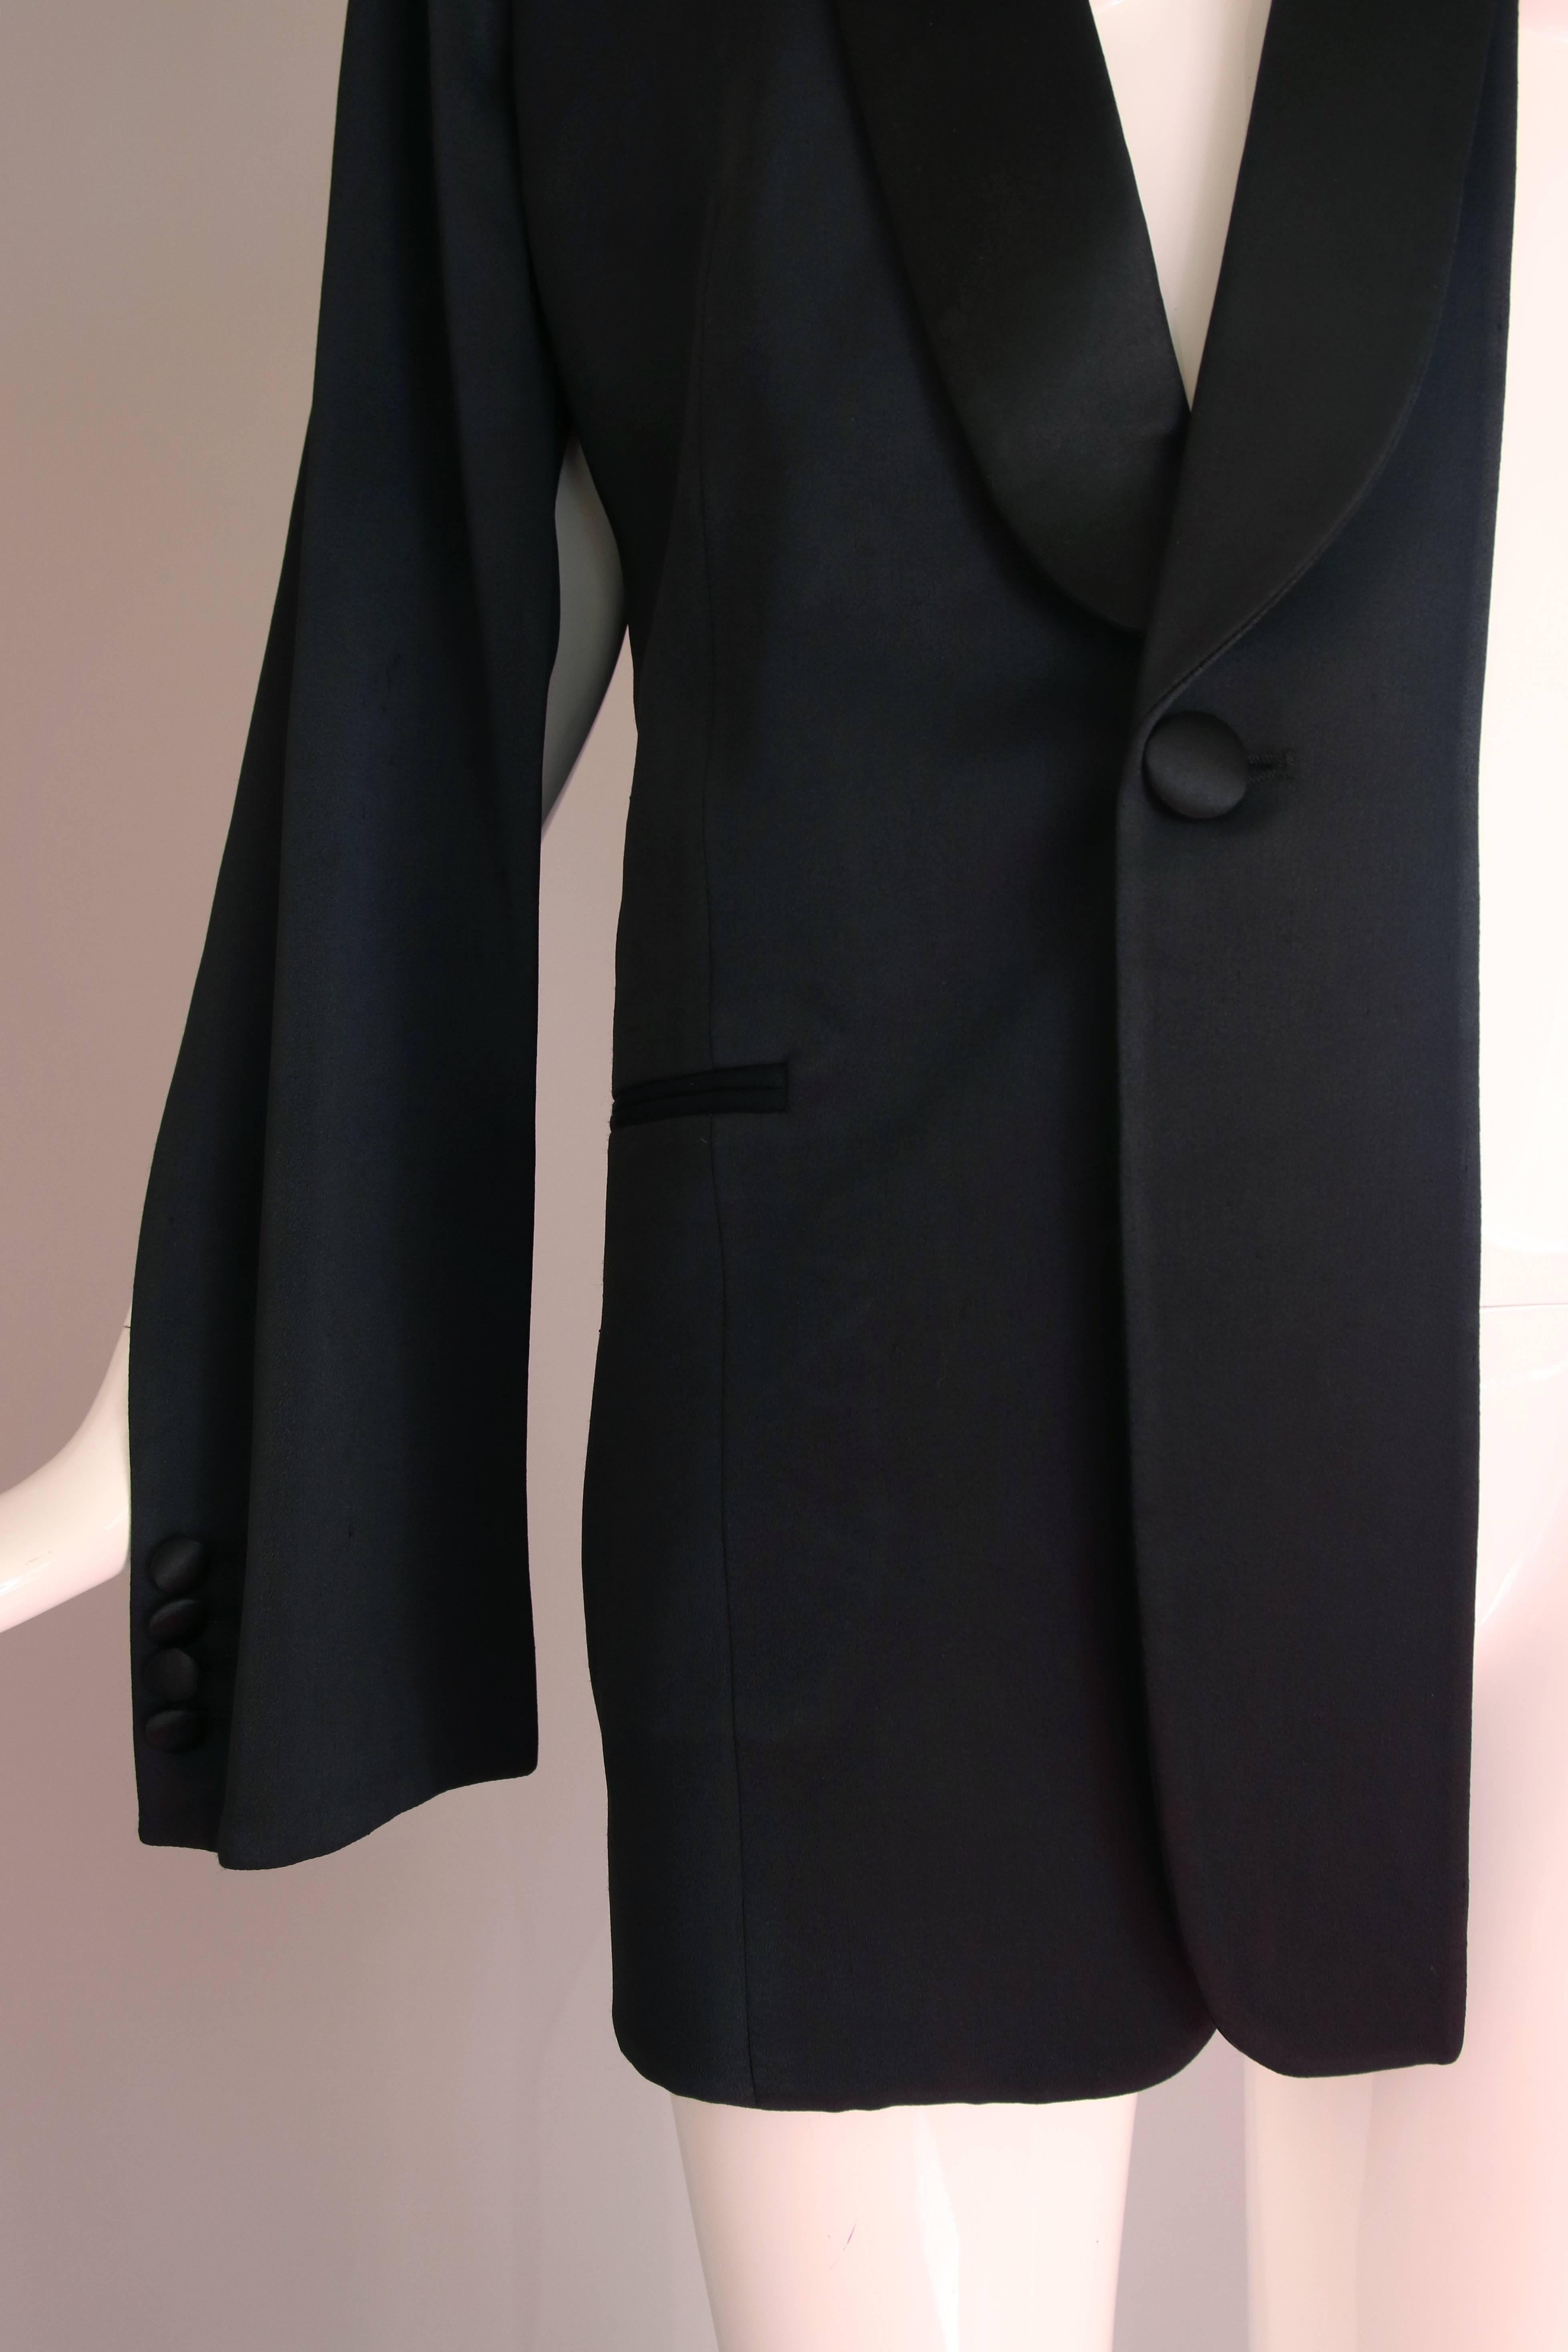 Martin Margiela Black Deconstructed Tuxedo Jacket In Excellent Condition In Studio City, CA